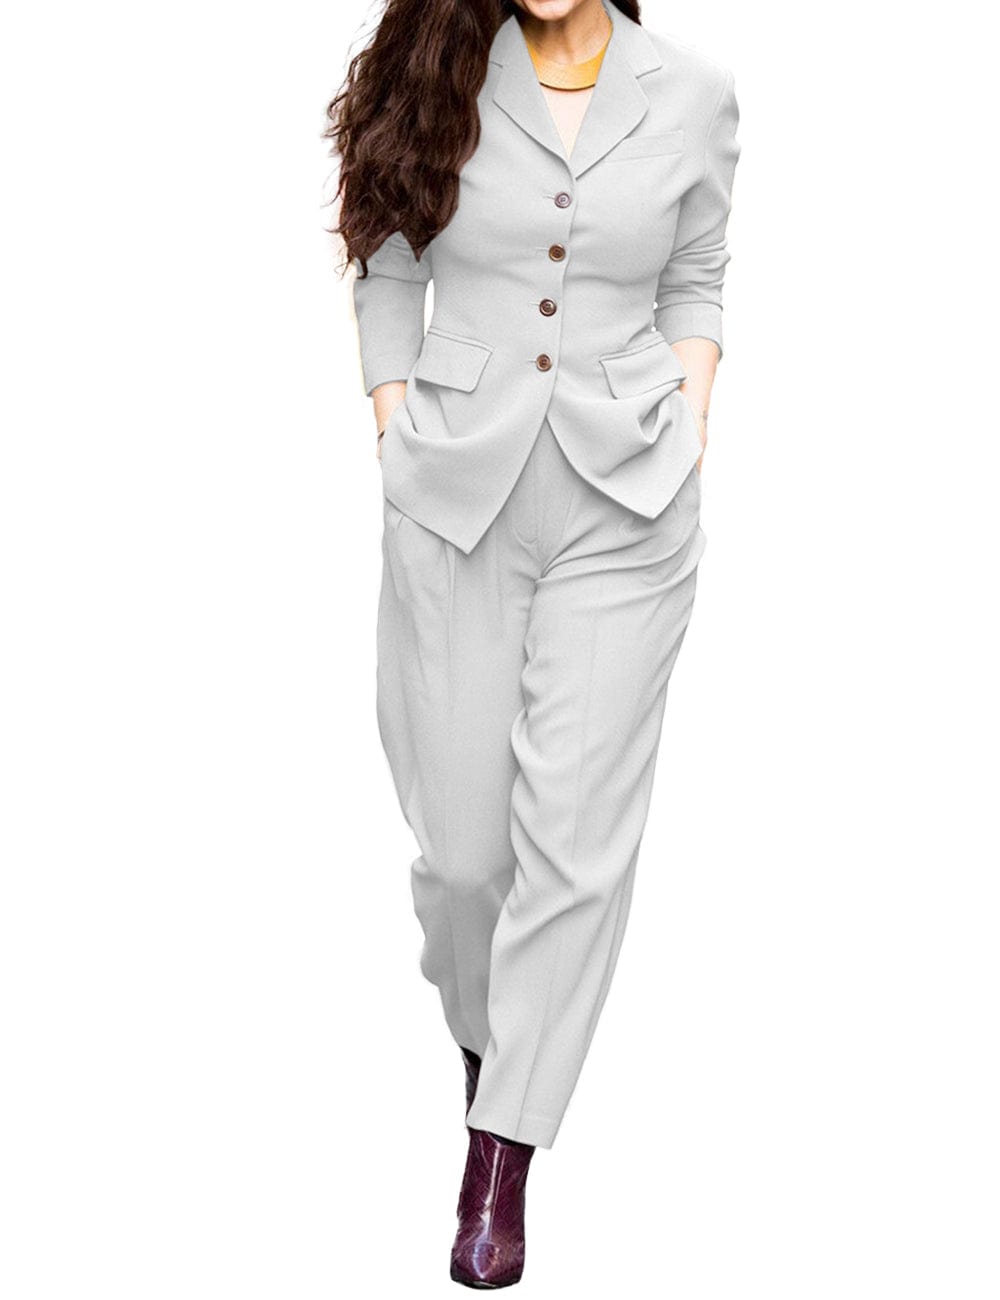 solovedress Women's Suit 2 Piece Fashionable Slim Jacket（Blazer+Pants）